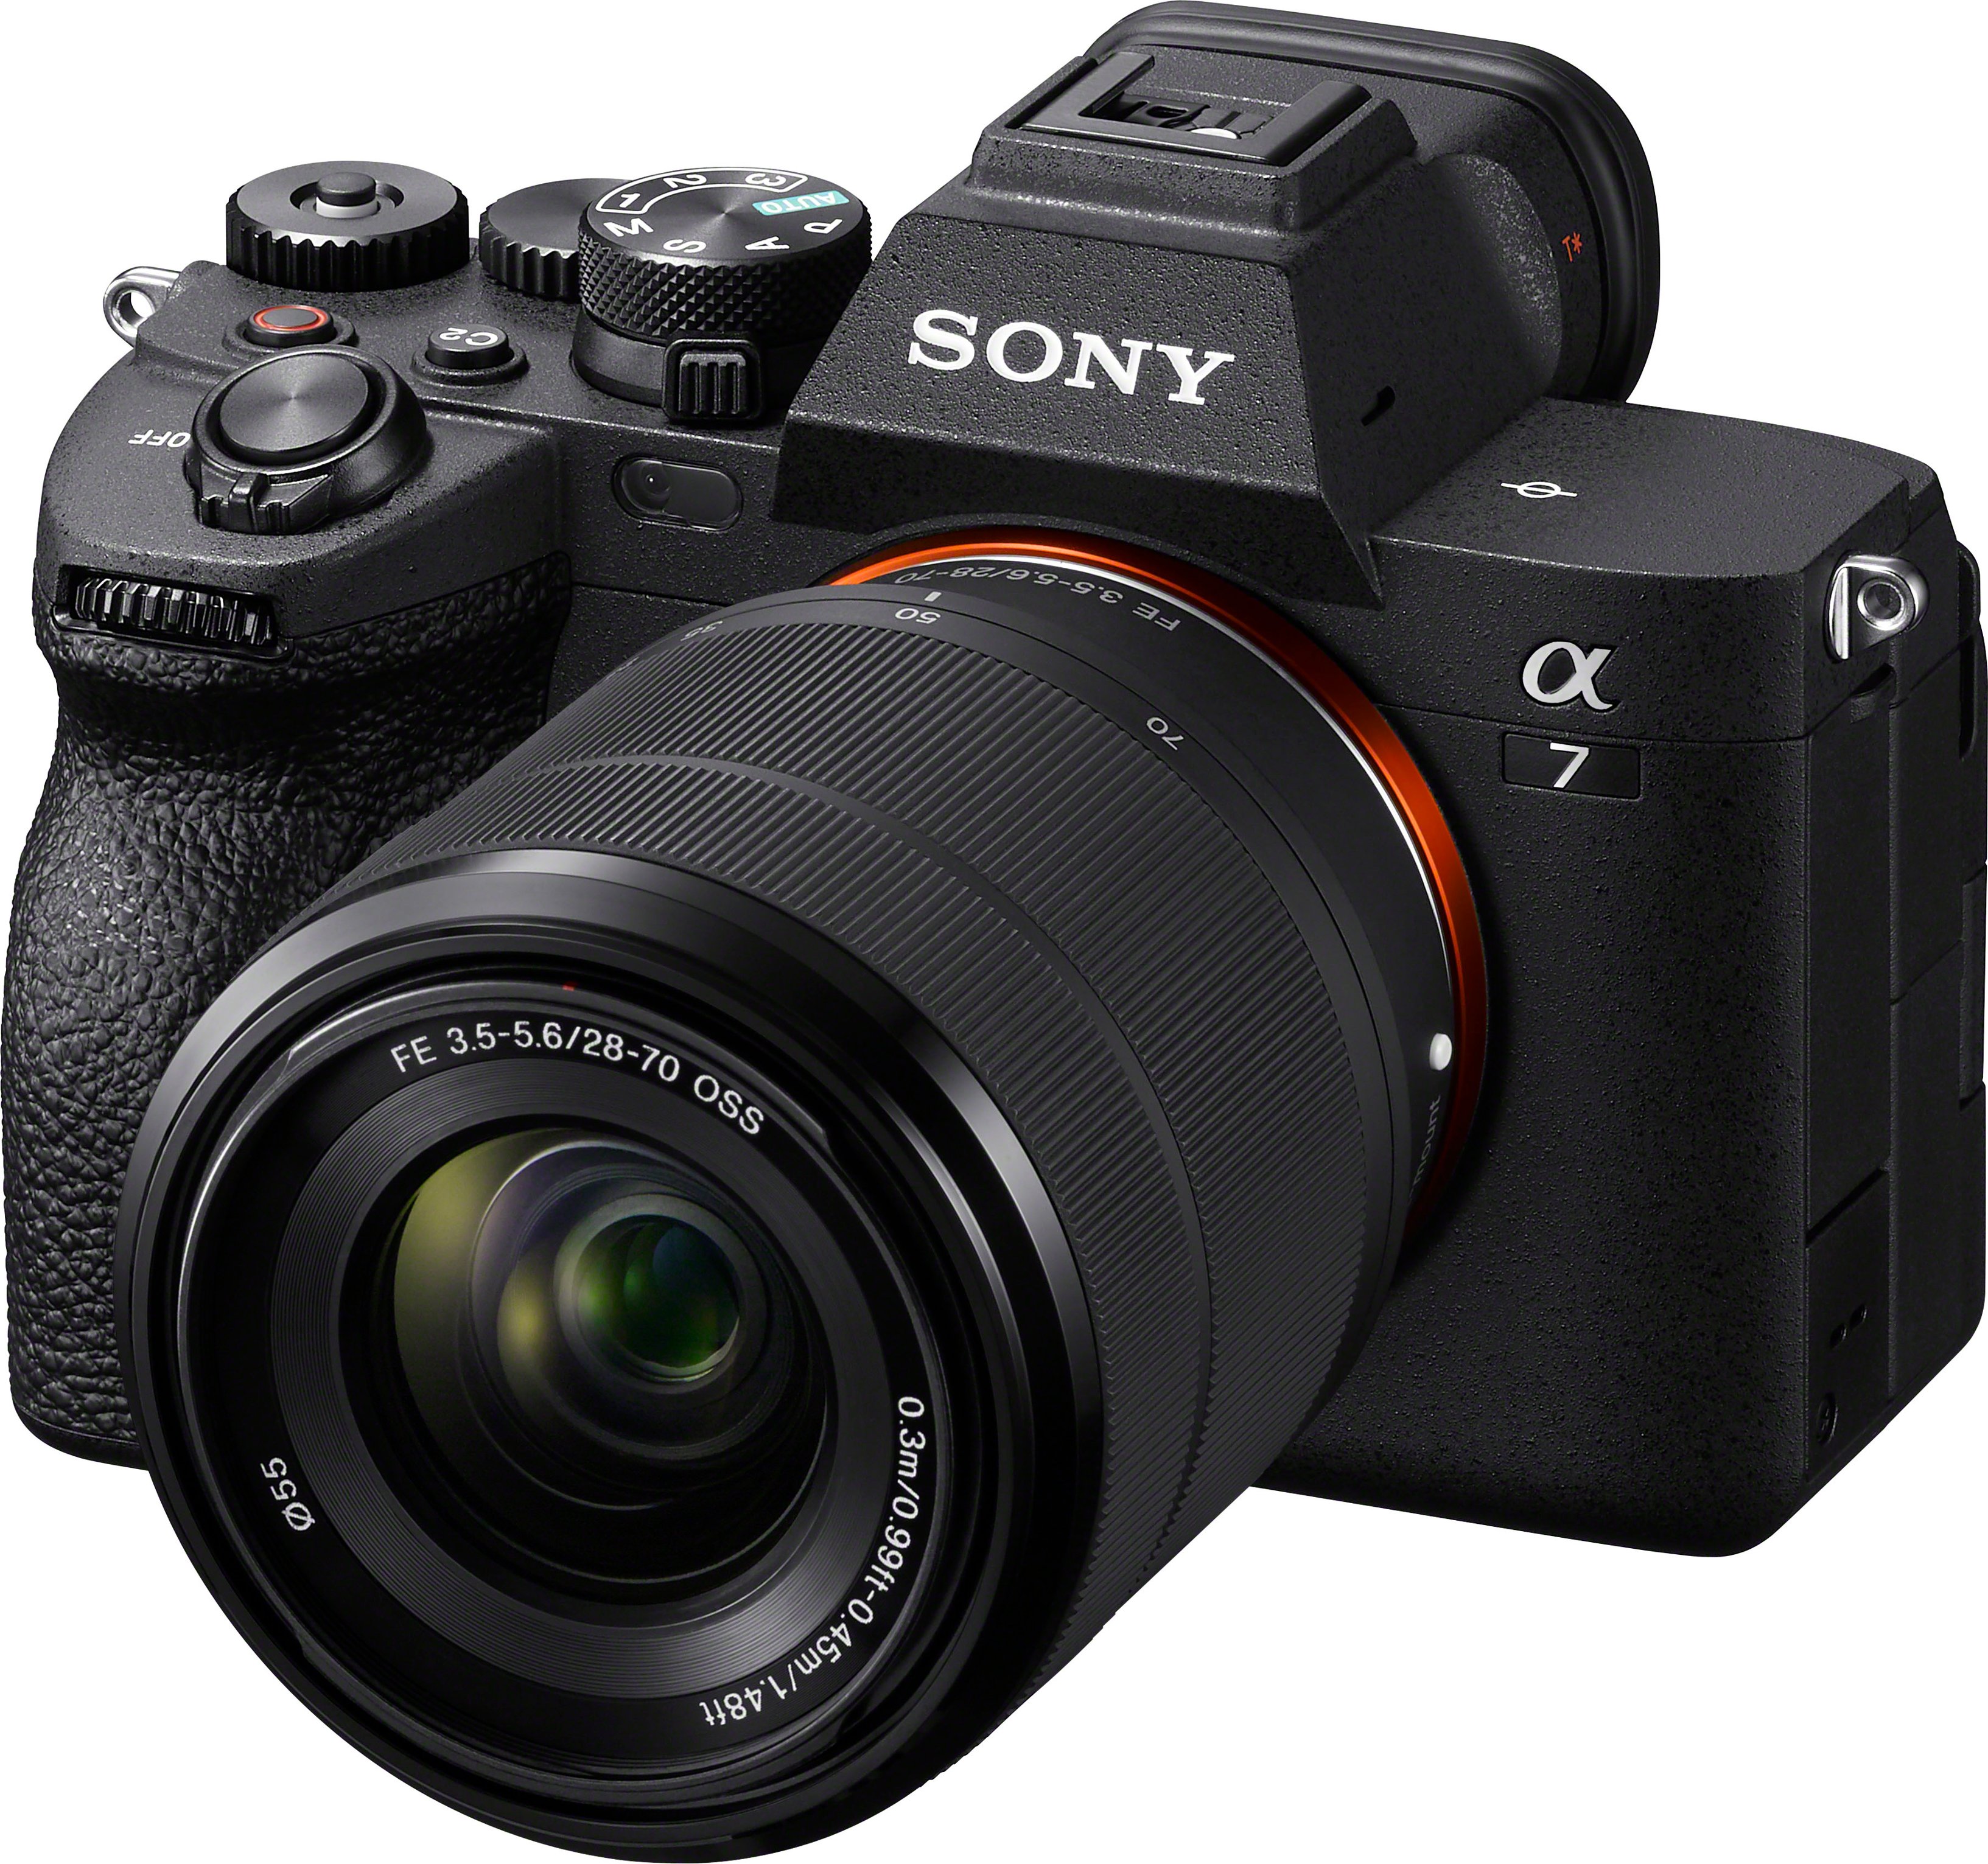 Angle View: Sony - FE 28mm F2 E-Mount Prime Lens - Black